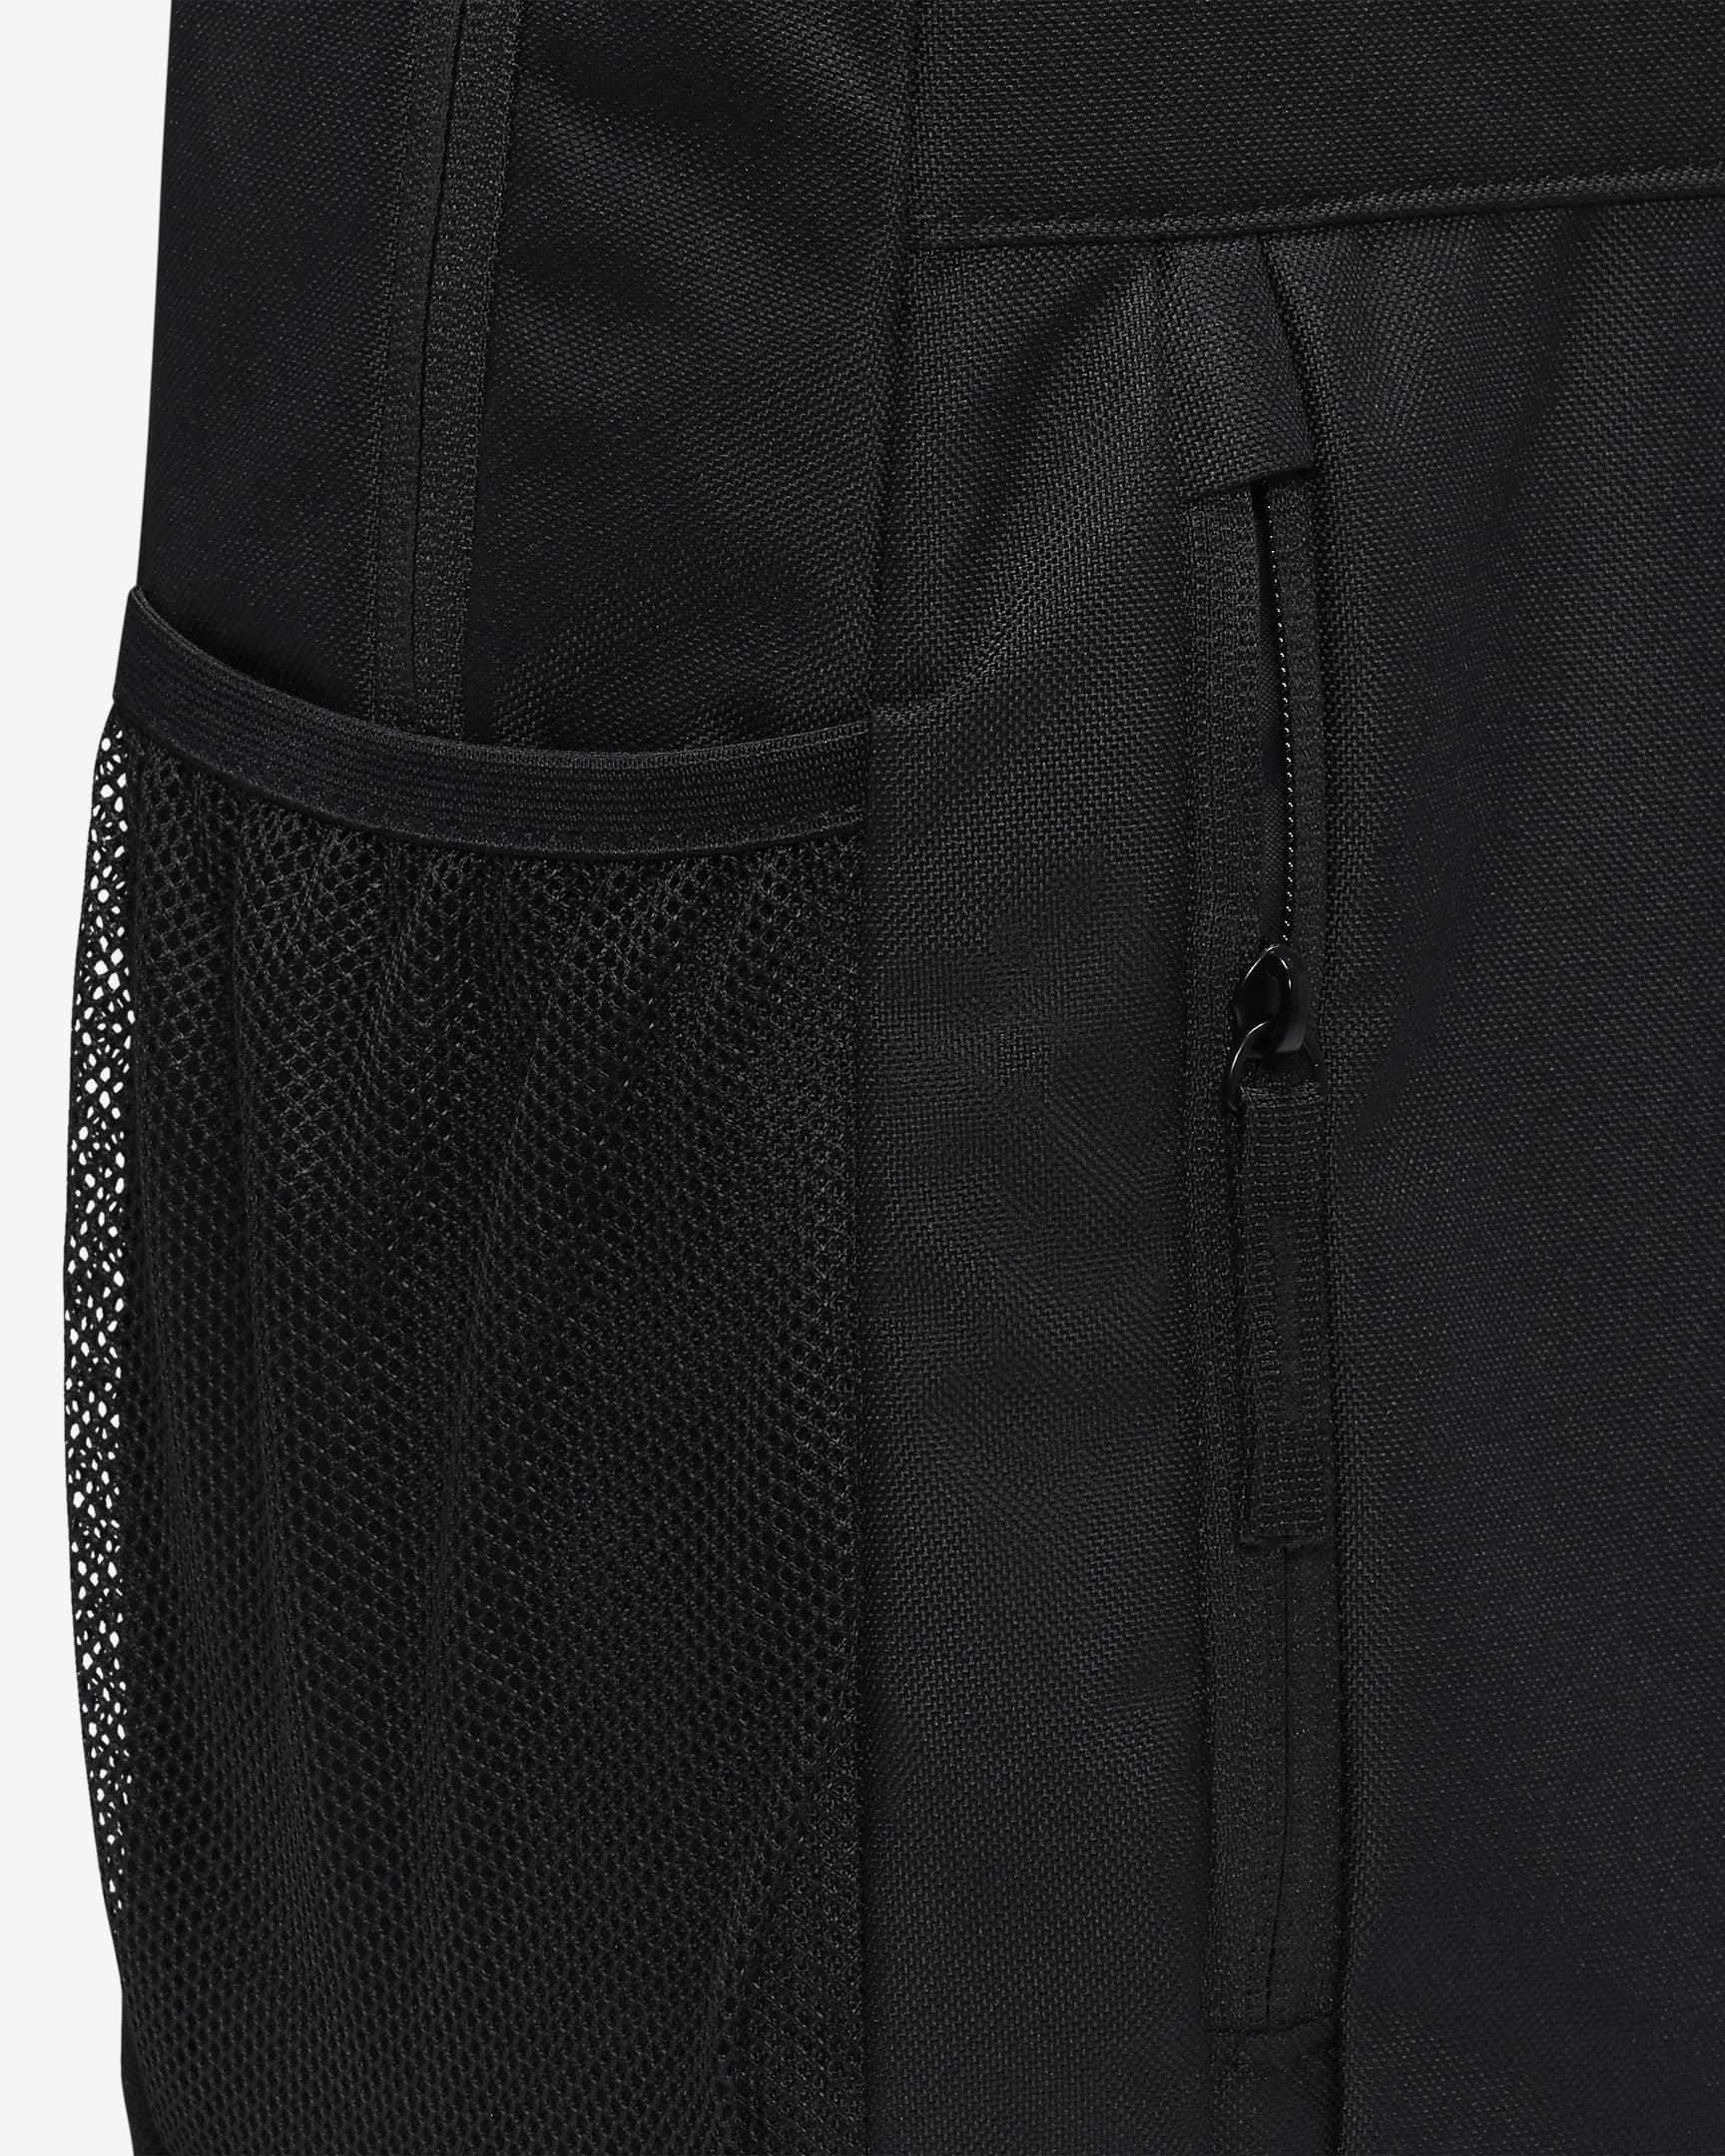 Nike Kids' Backpack (20L) - Black/Black/University Red